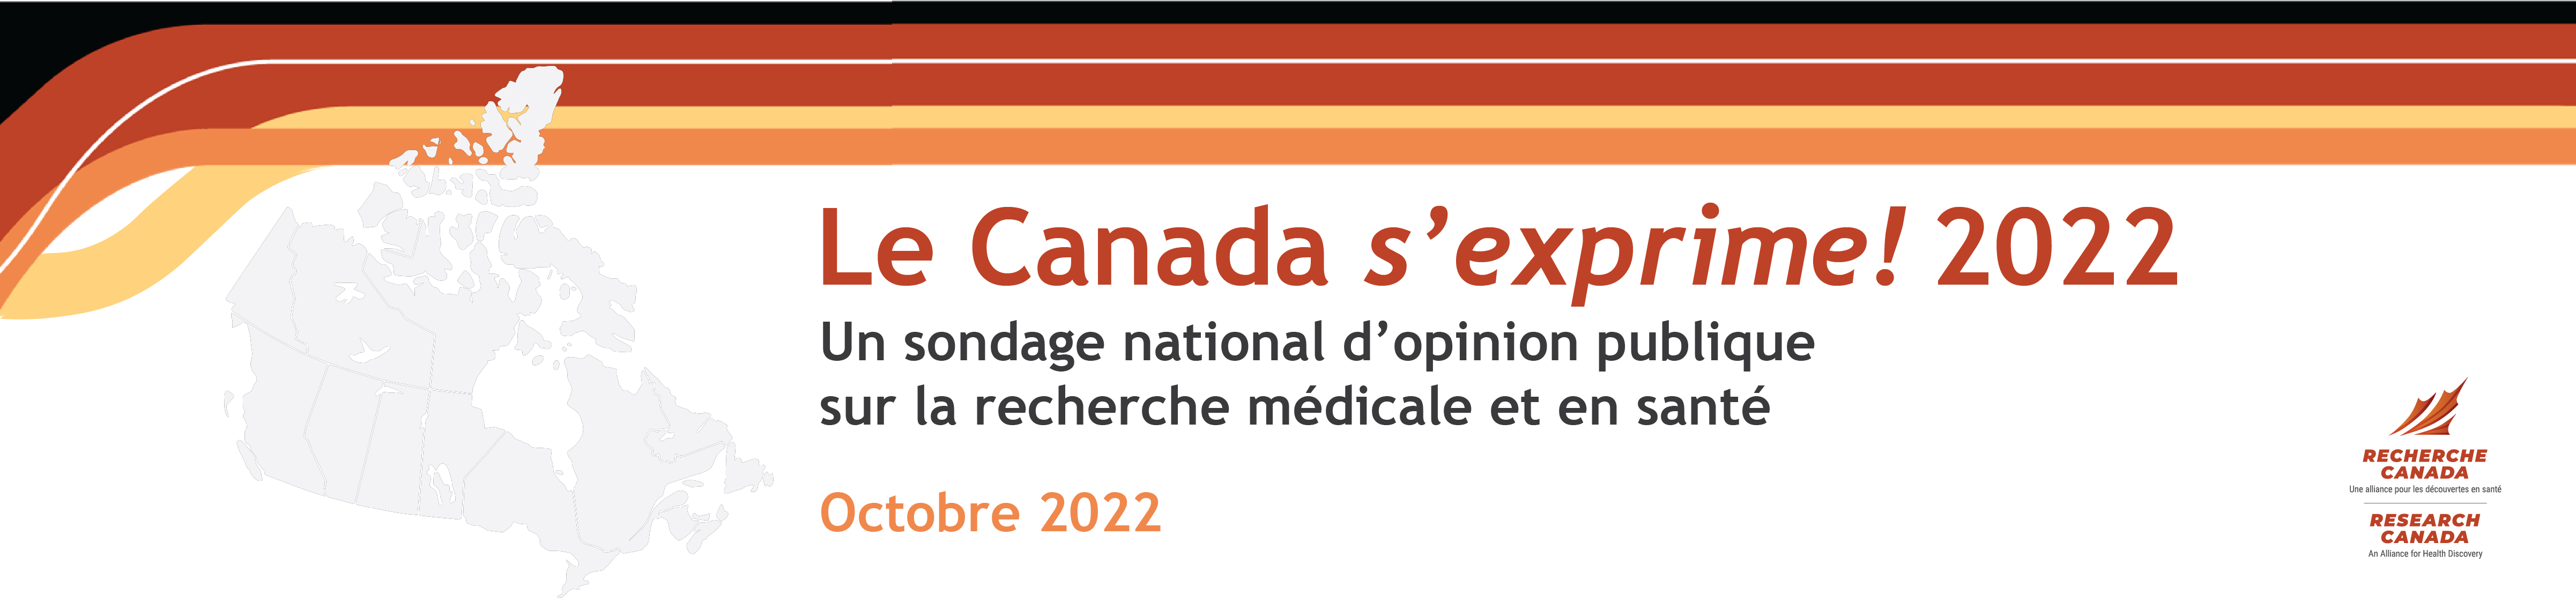 CanadaSpeaks 2022_WebBanner_FR